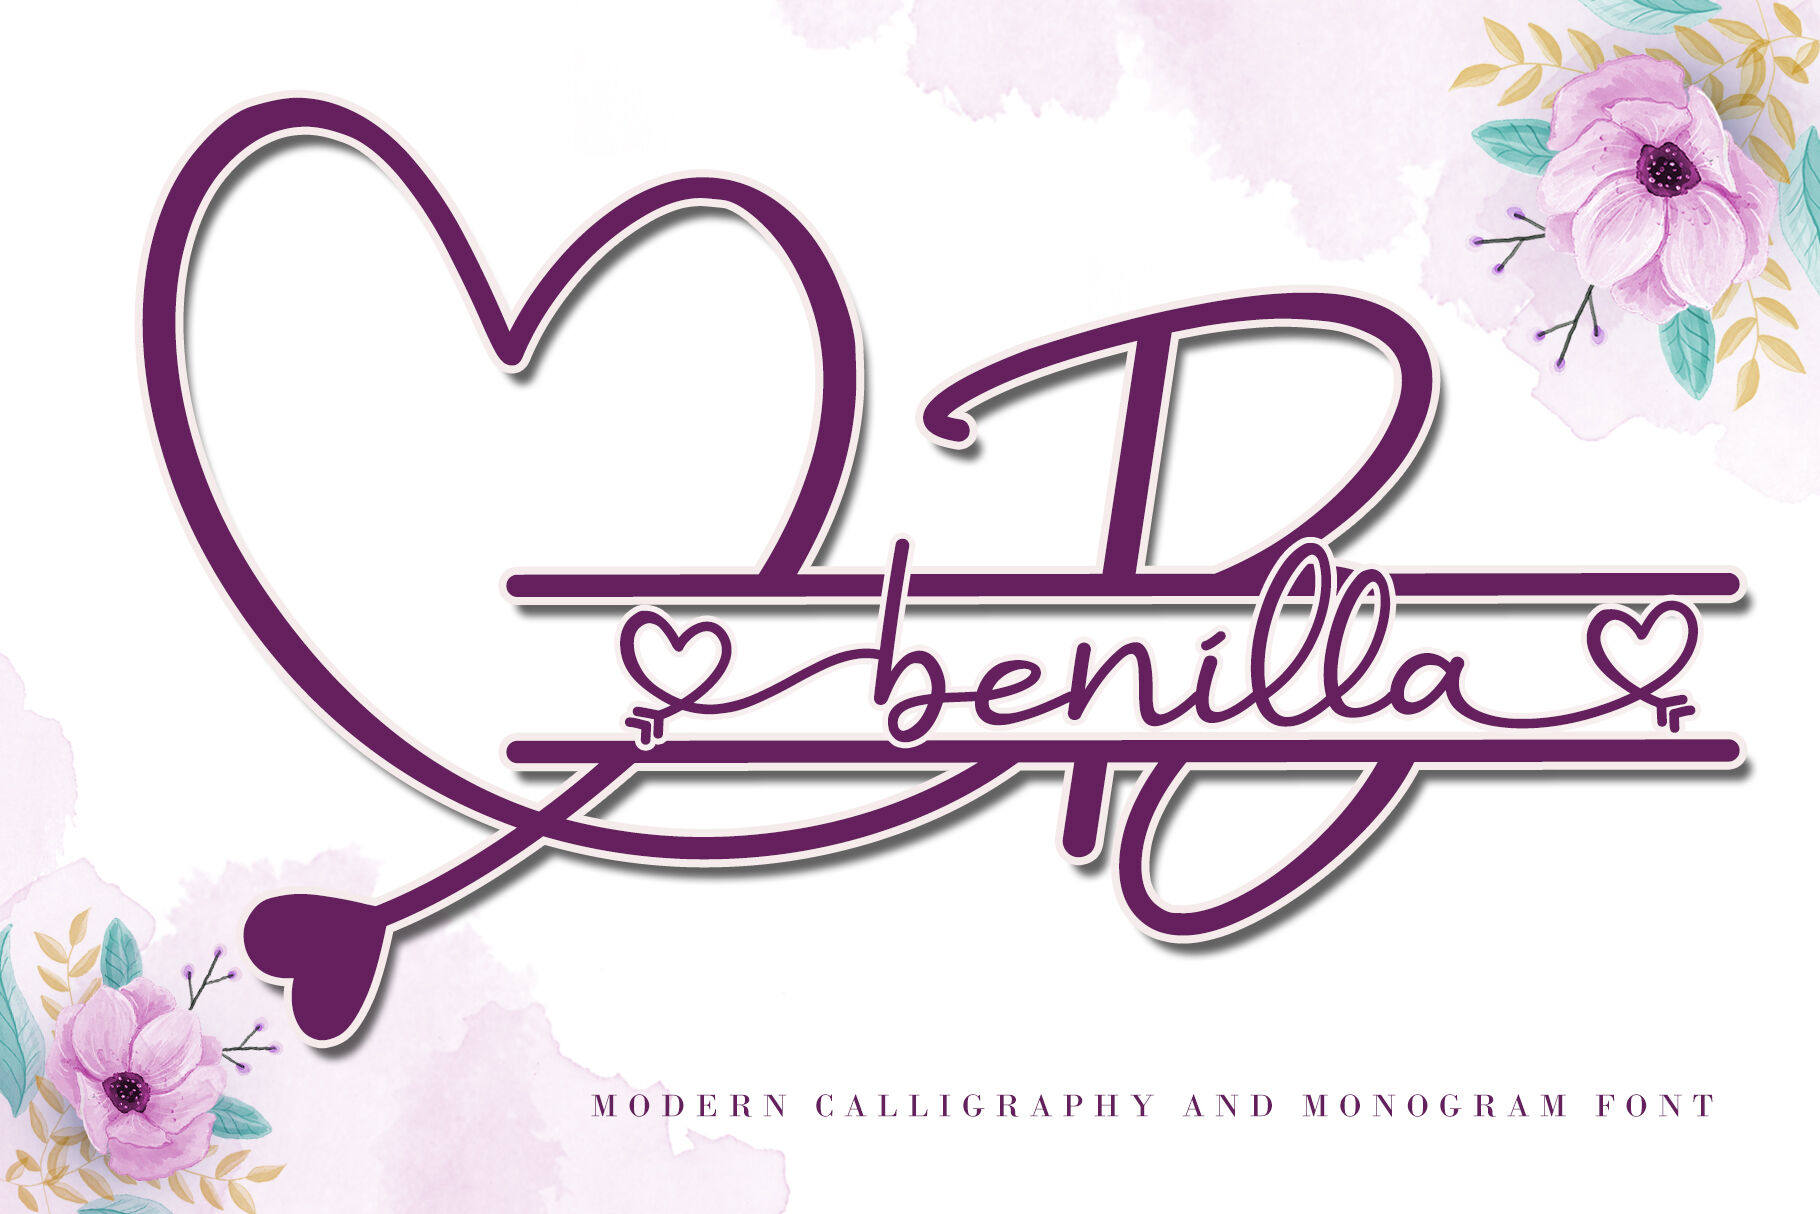 Benilla Modern Calligraphy And Monogram Font By Aen Creative Store Thehungryjpeg Com